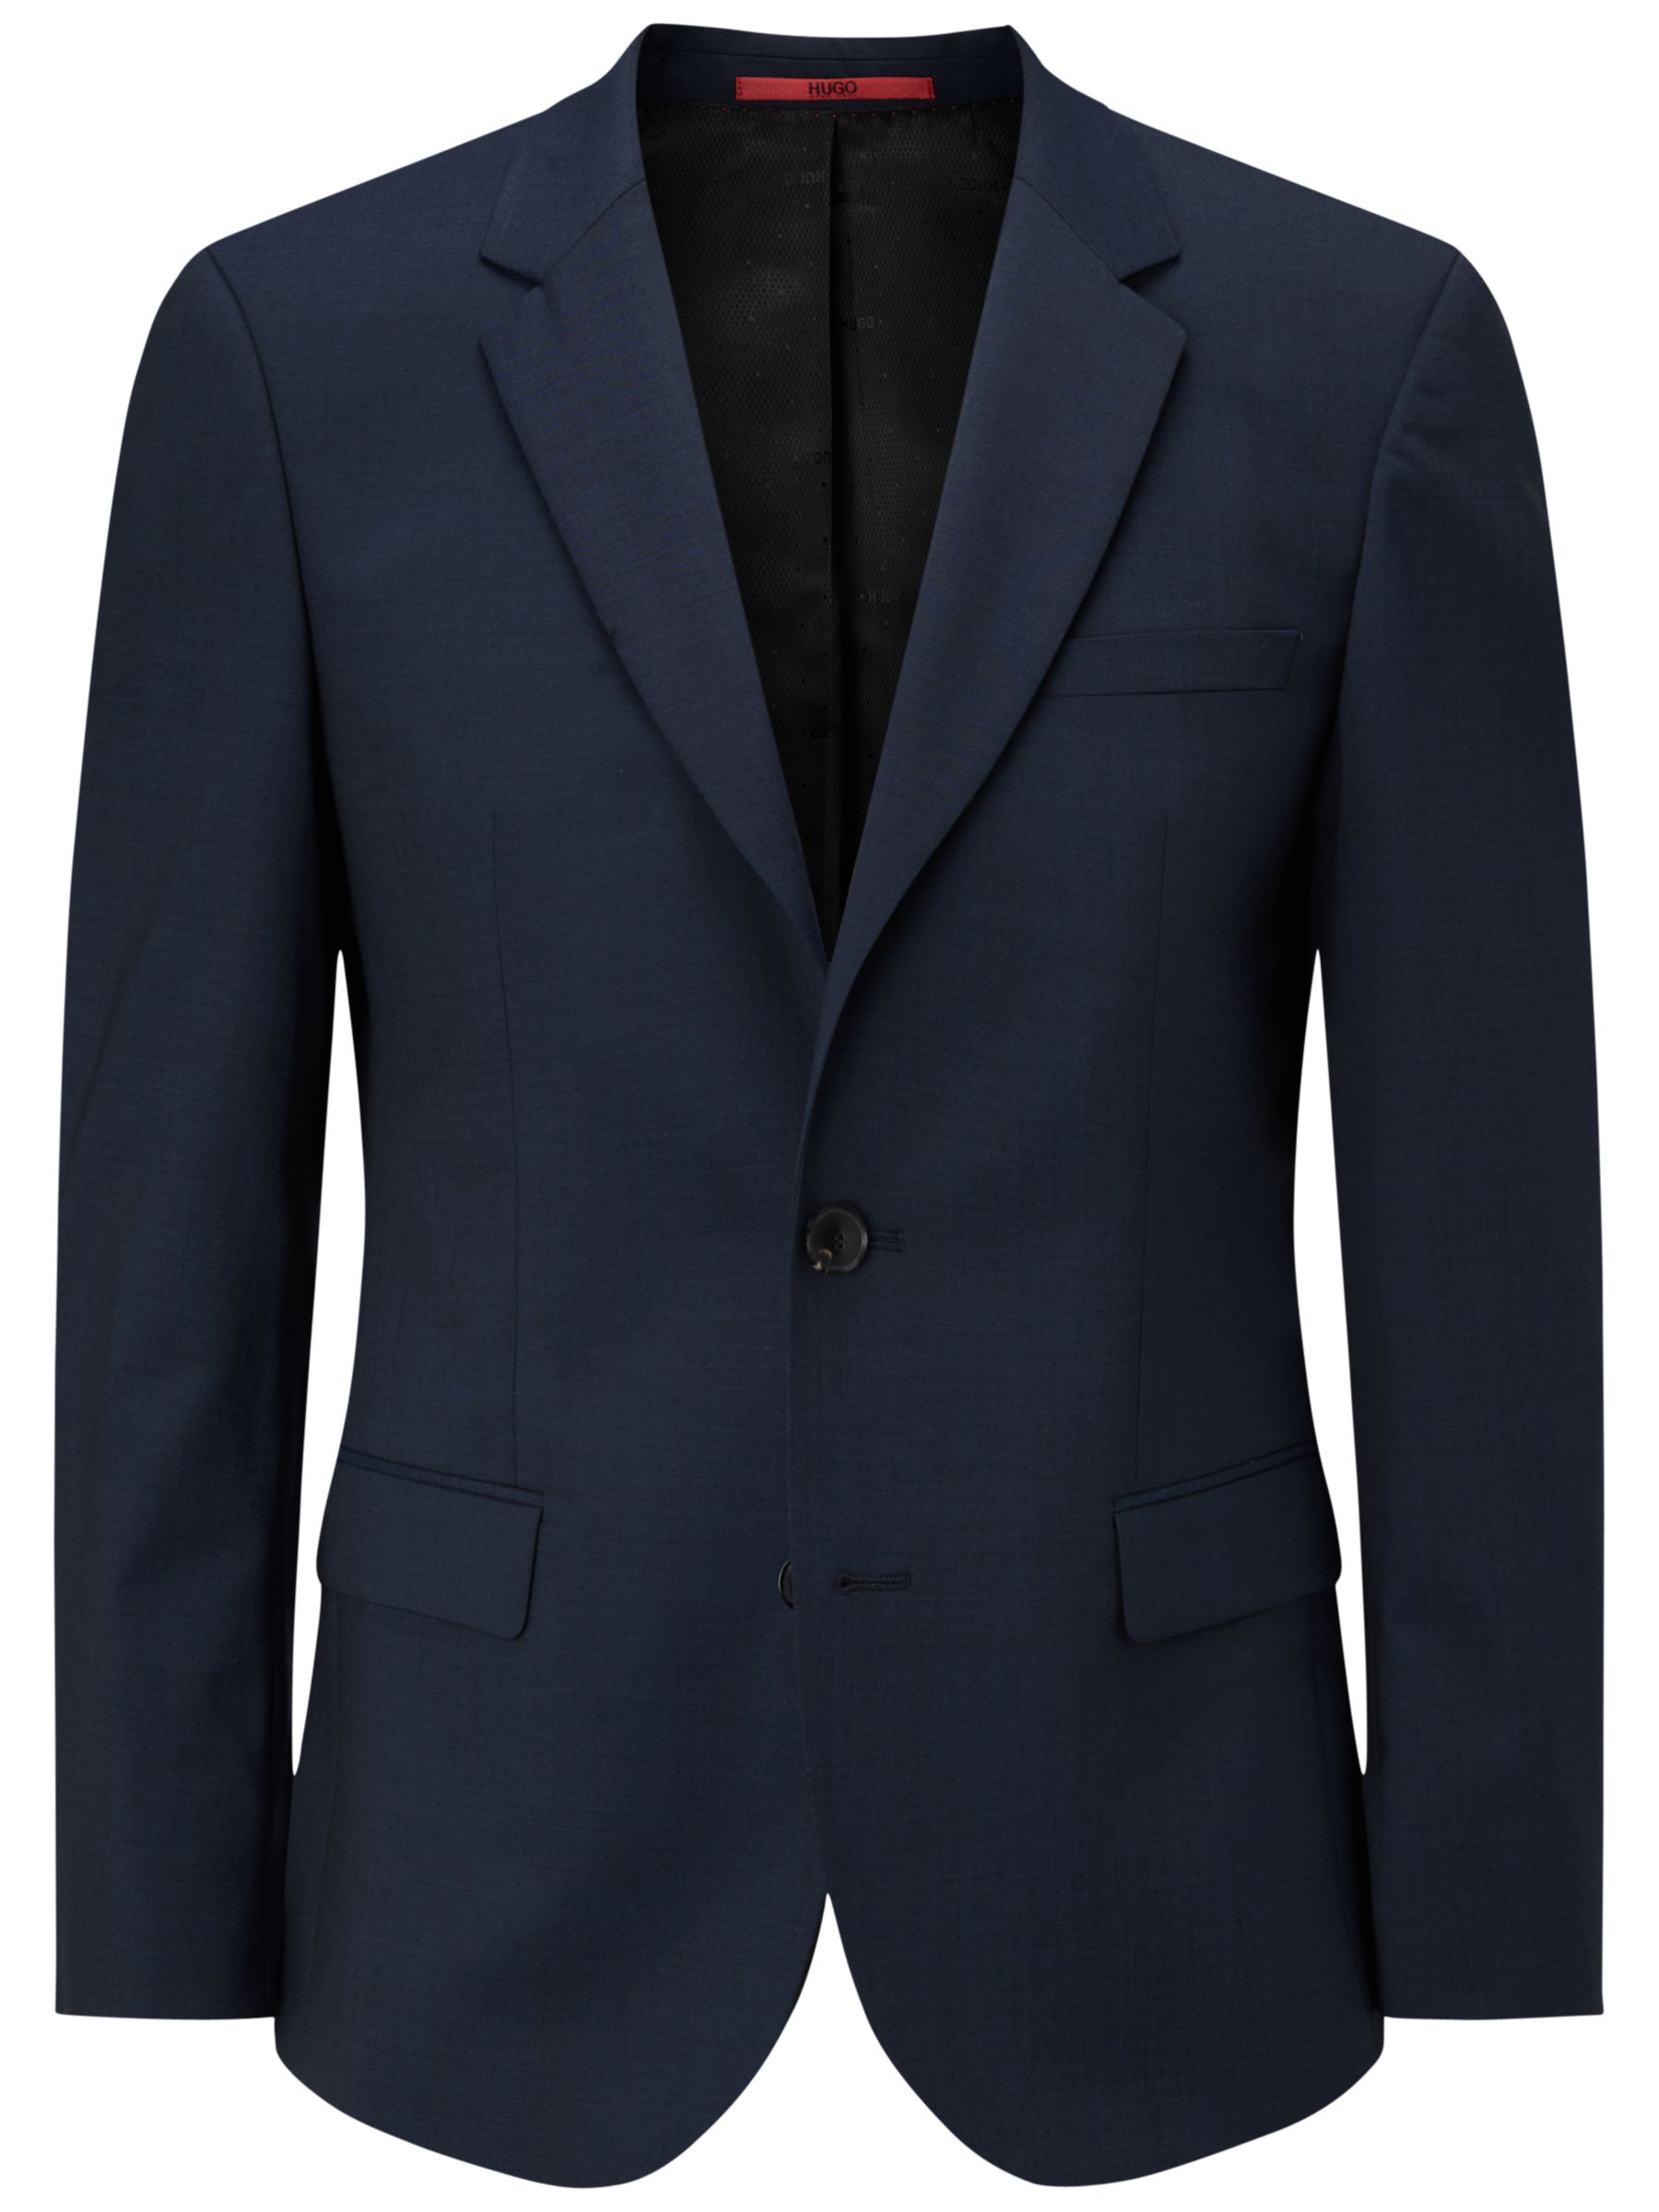 Hugo By Hugo Boss Hayes Slim Fit Suit Jacket Dark Blue At John Lewis And Partners